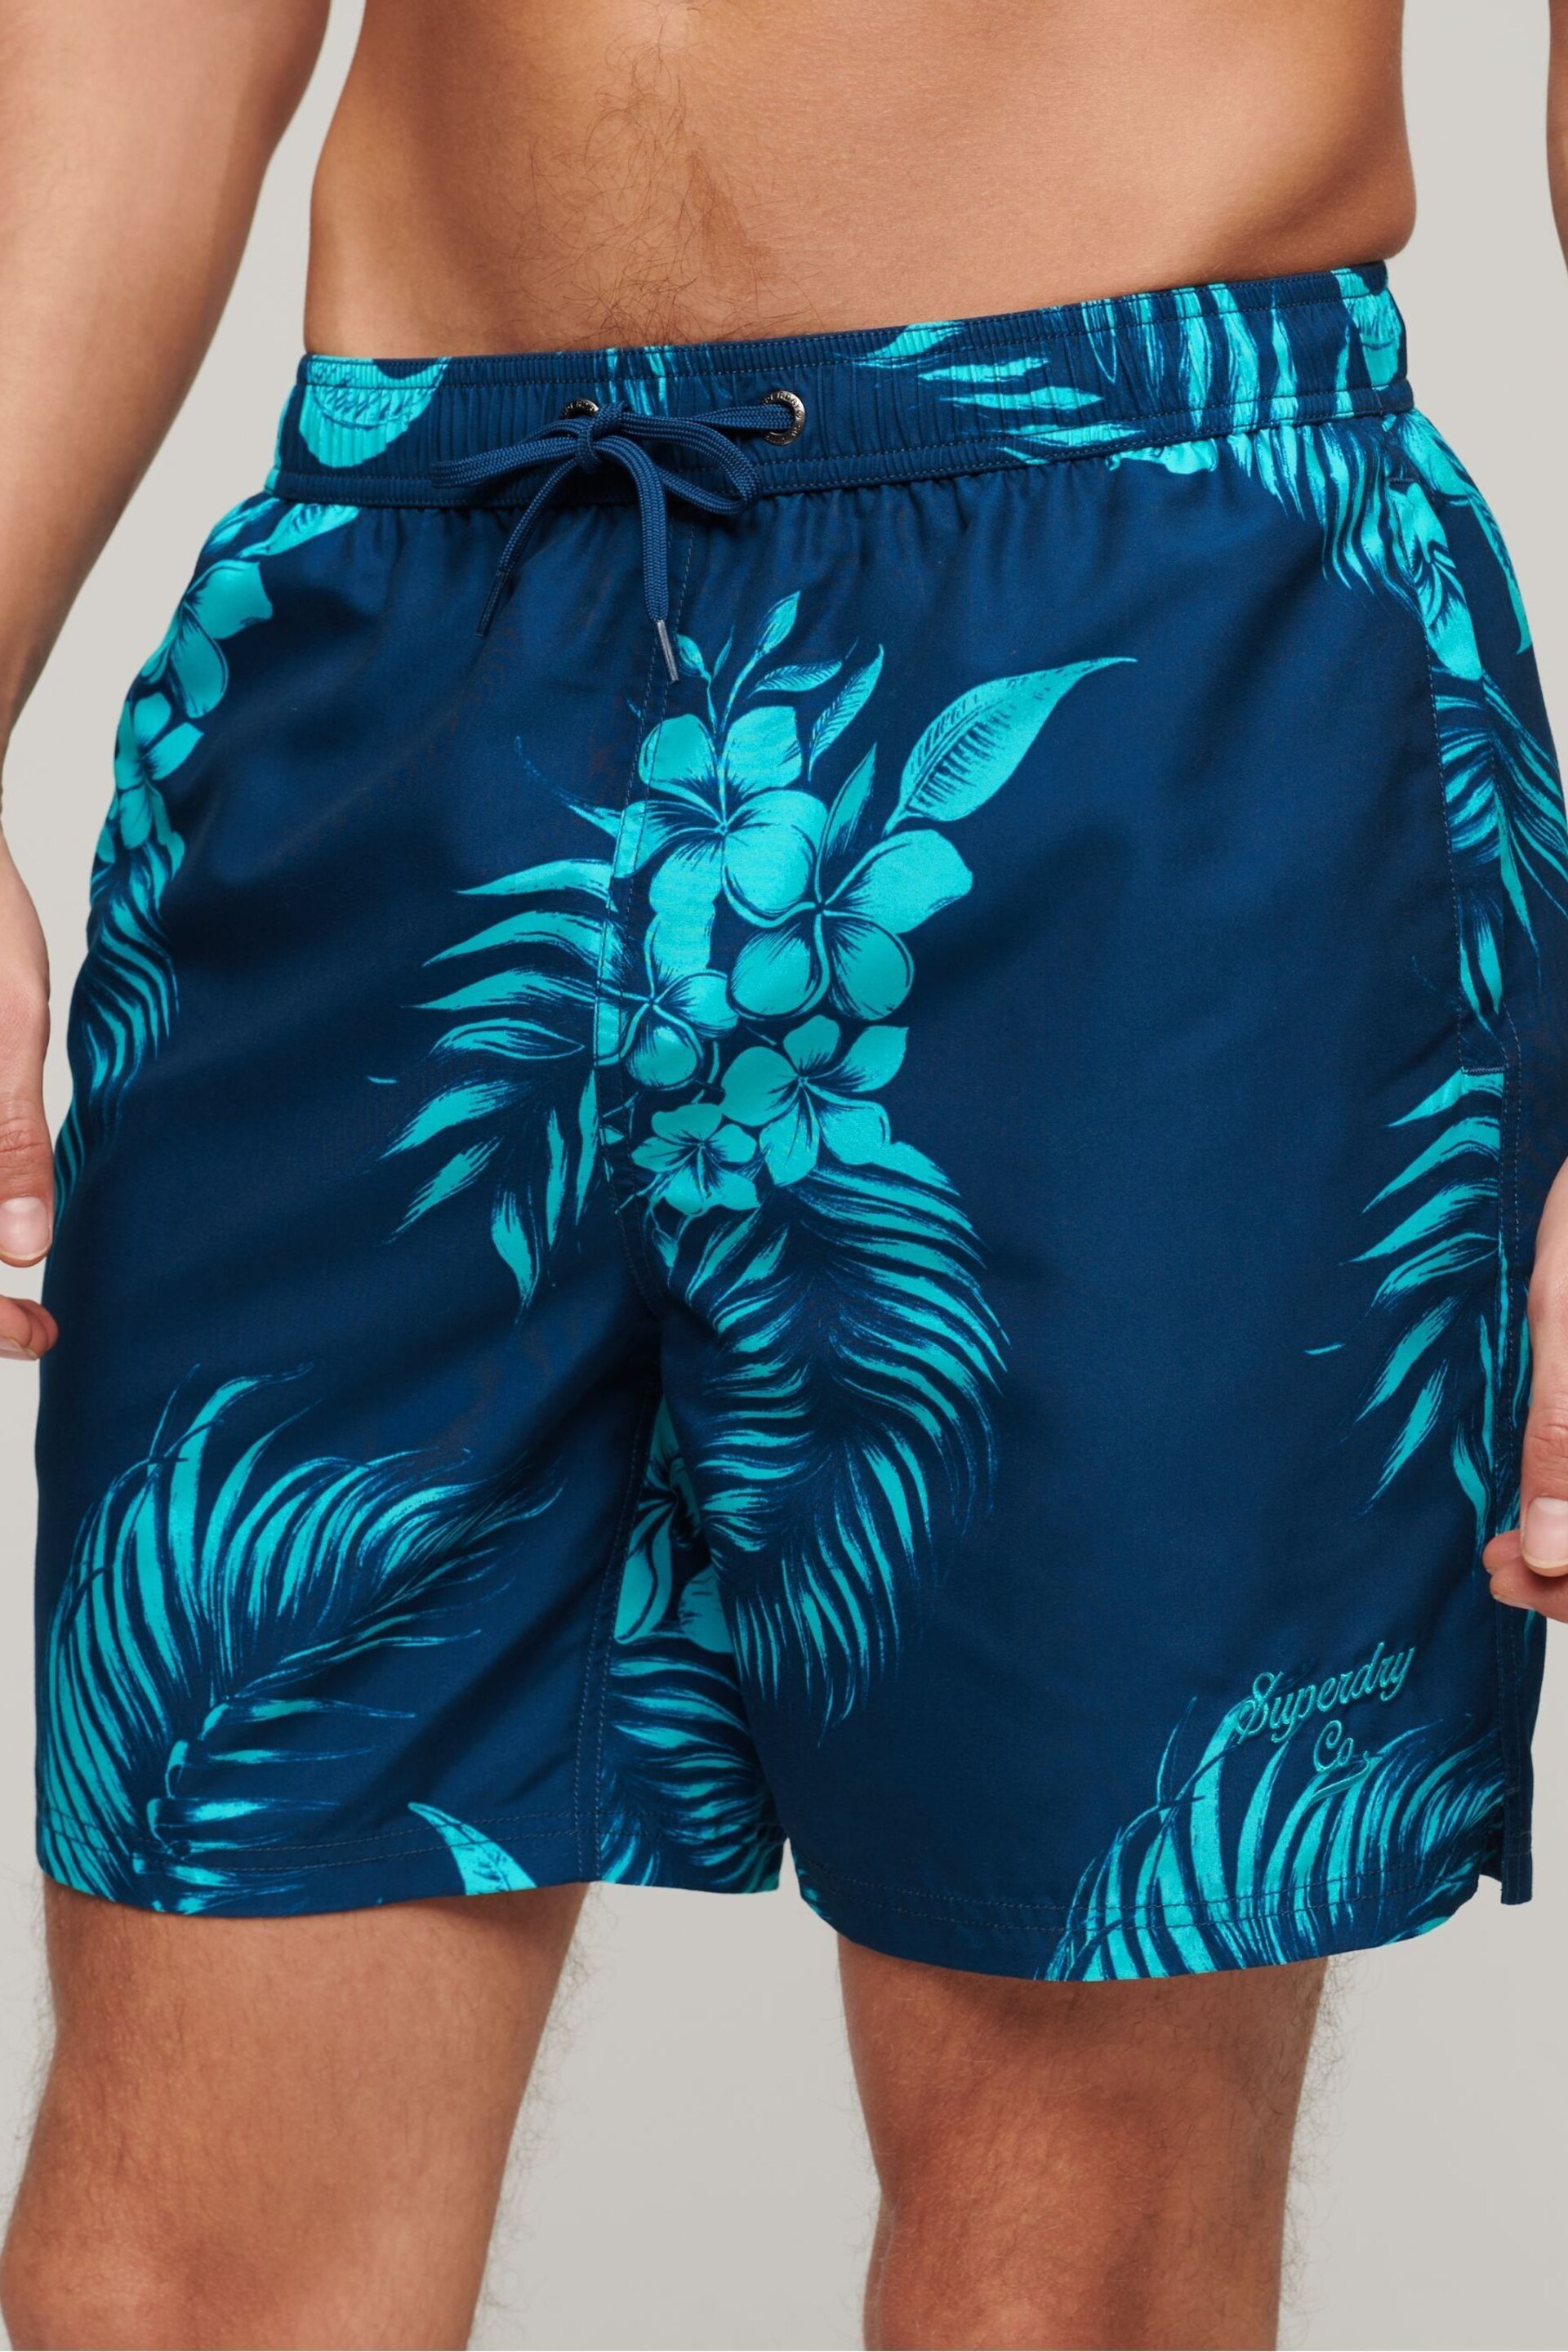 Superdry Blue Hawaiian Print 17 Swim Shorts - Image 2 of 6